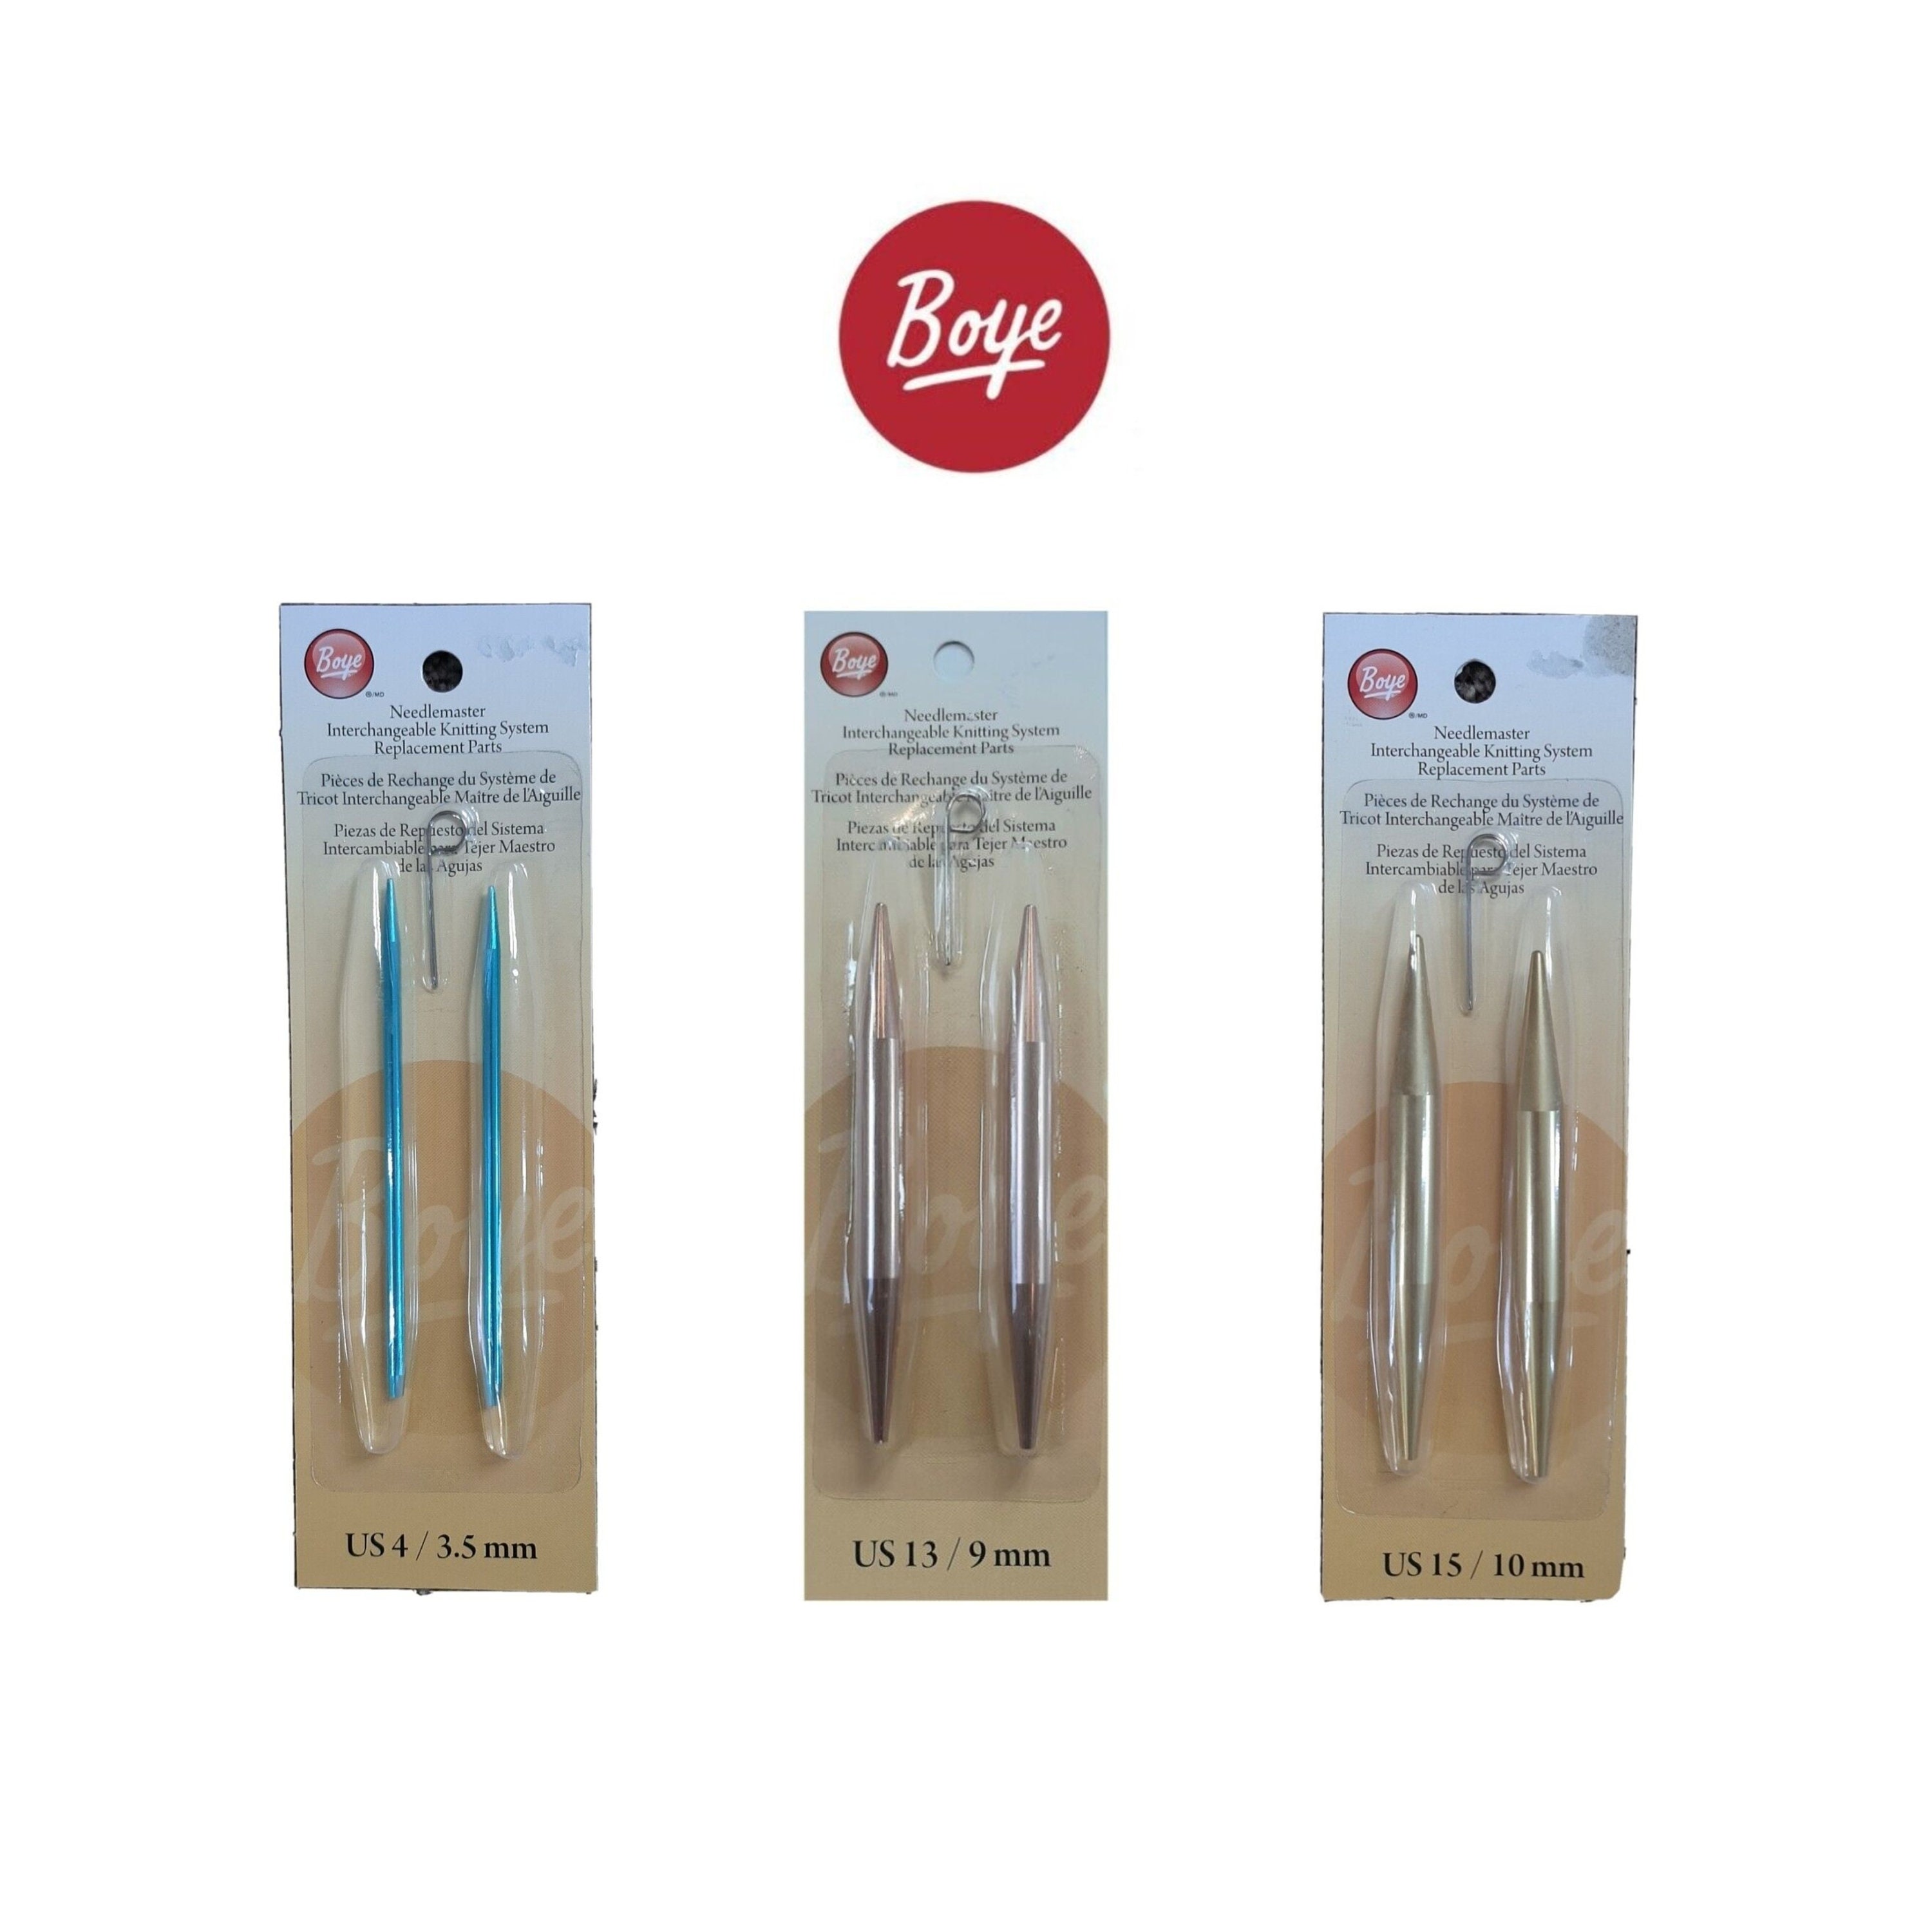 Skacel Profi Bamboo Circular Knitting Needles US Size 13 (9.00 mm)